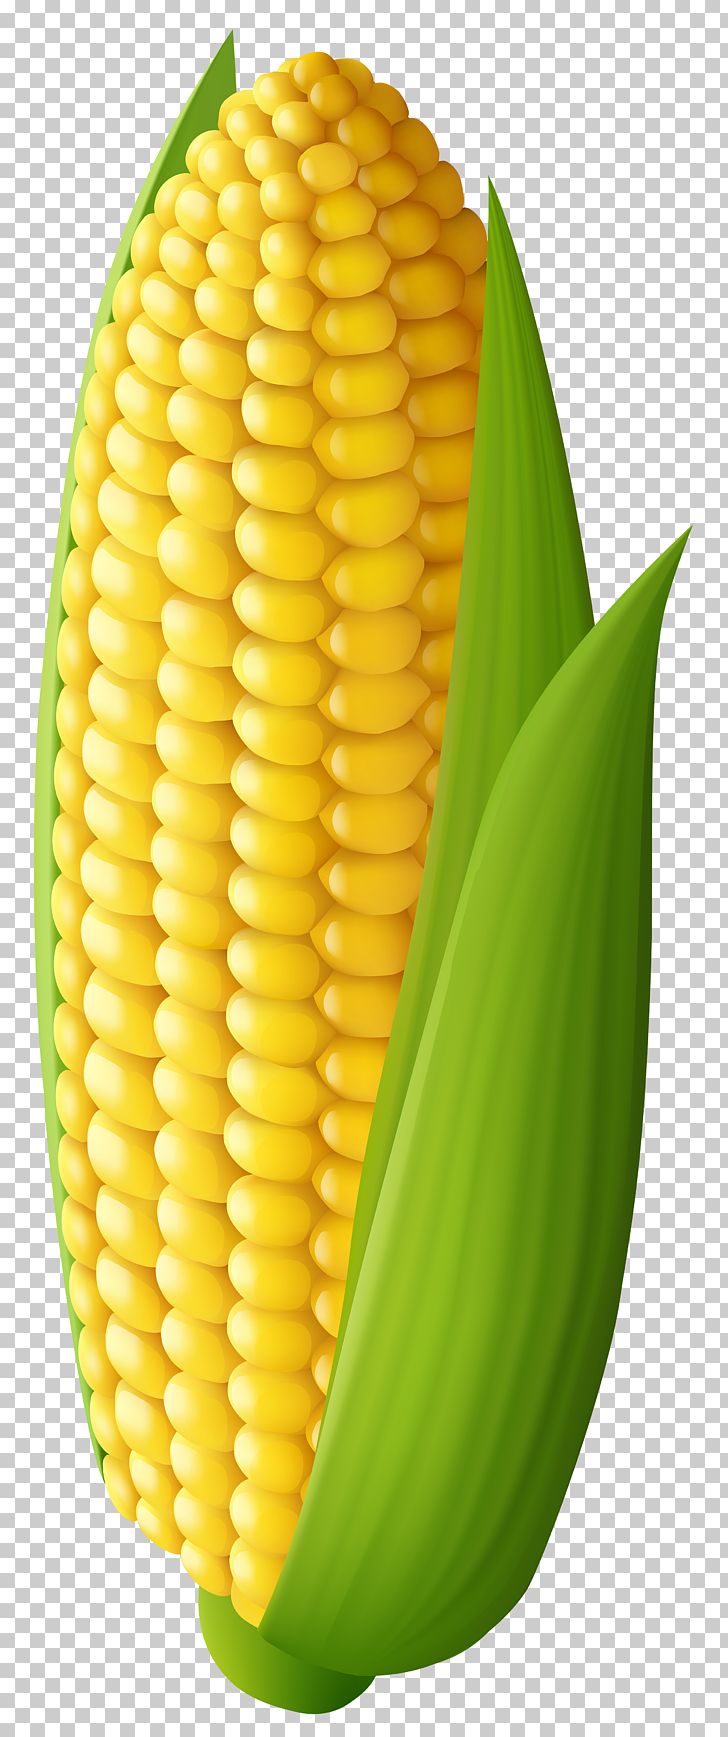 On the cob maize. Corn clipart corncob